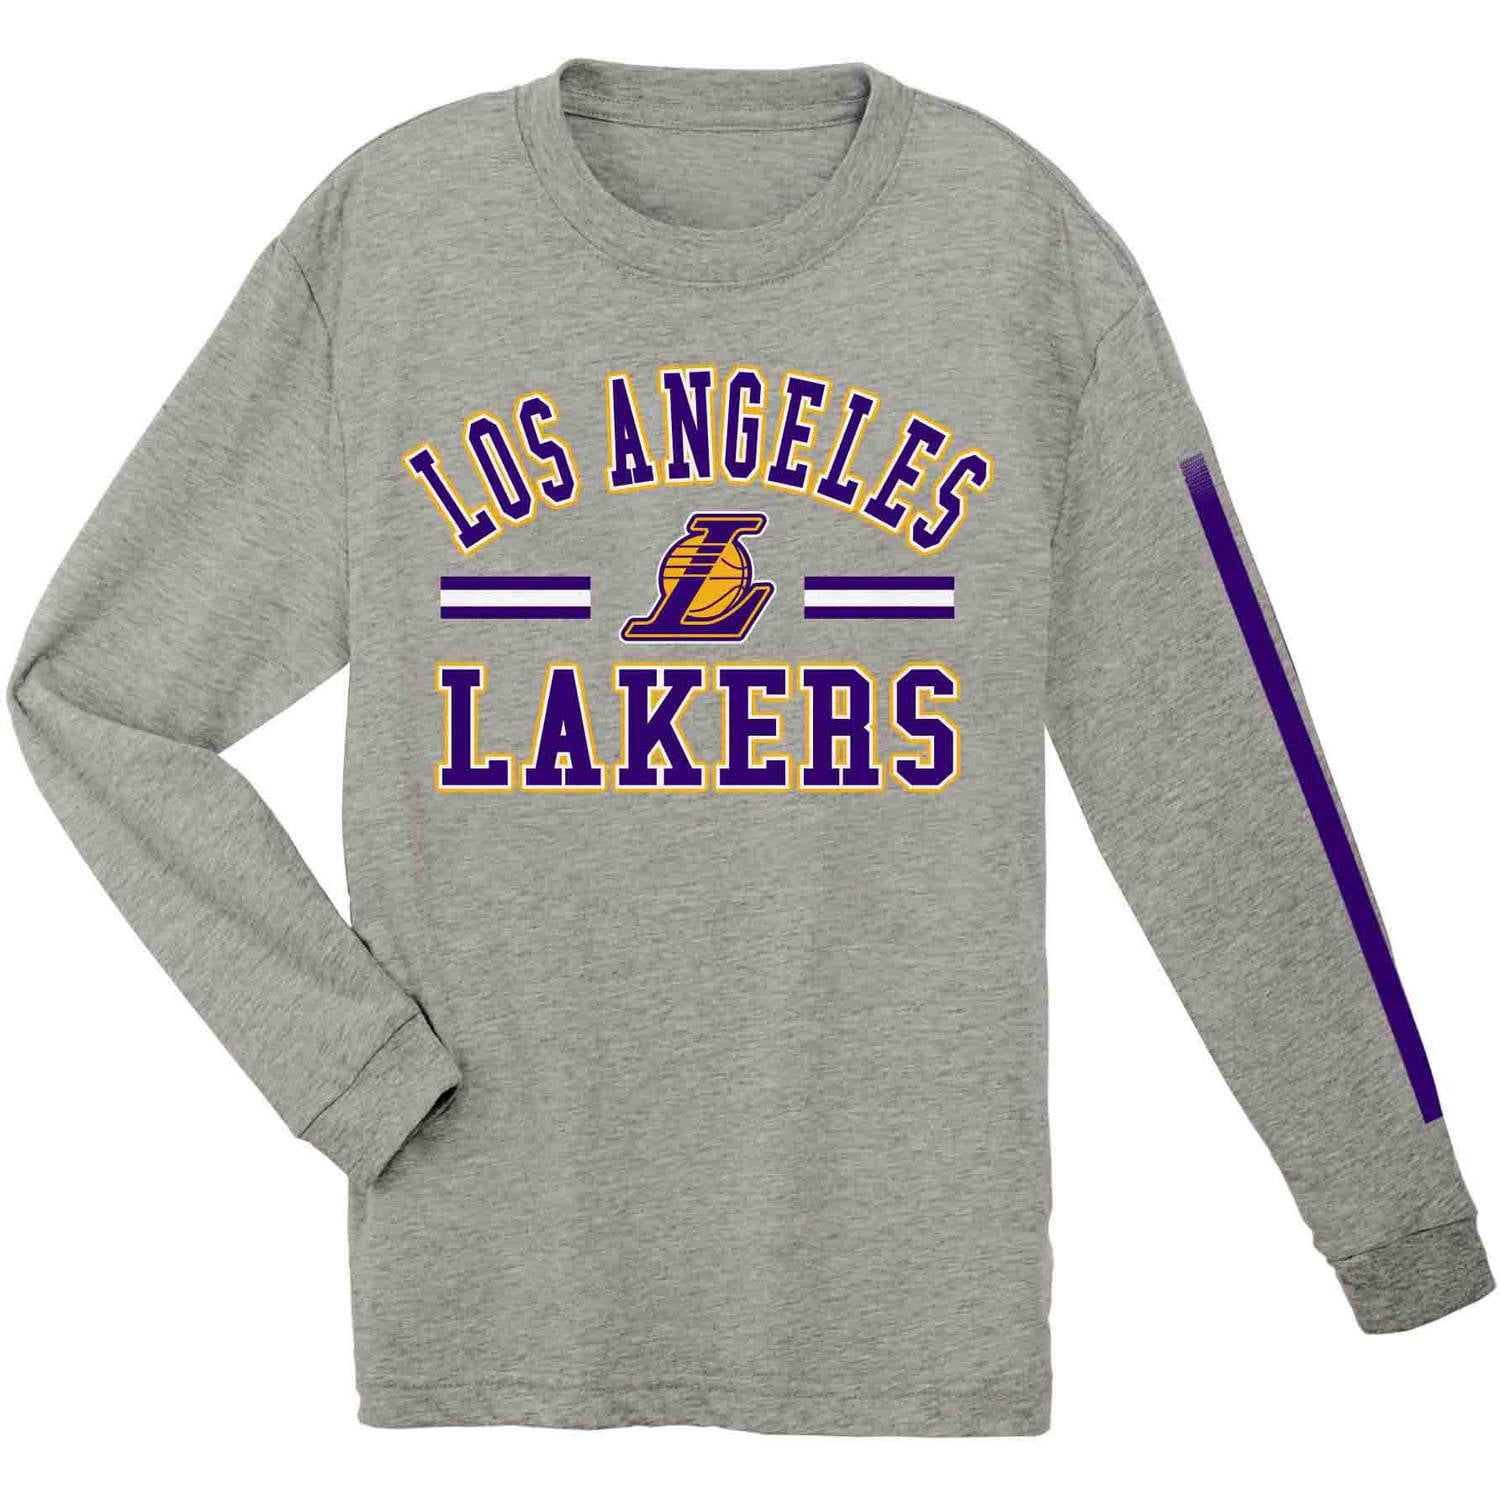 NBA Los Angeles Lakers Youth Team Long Sleeve Tee 